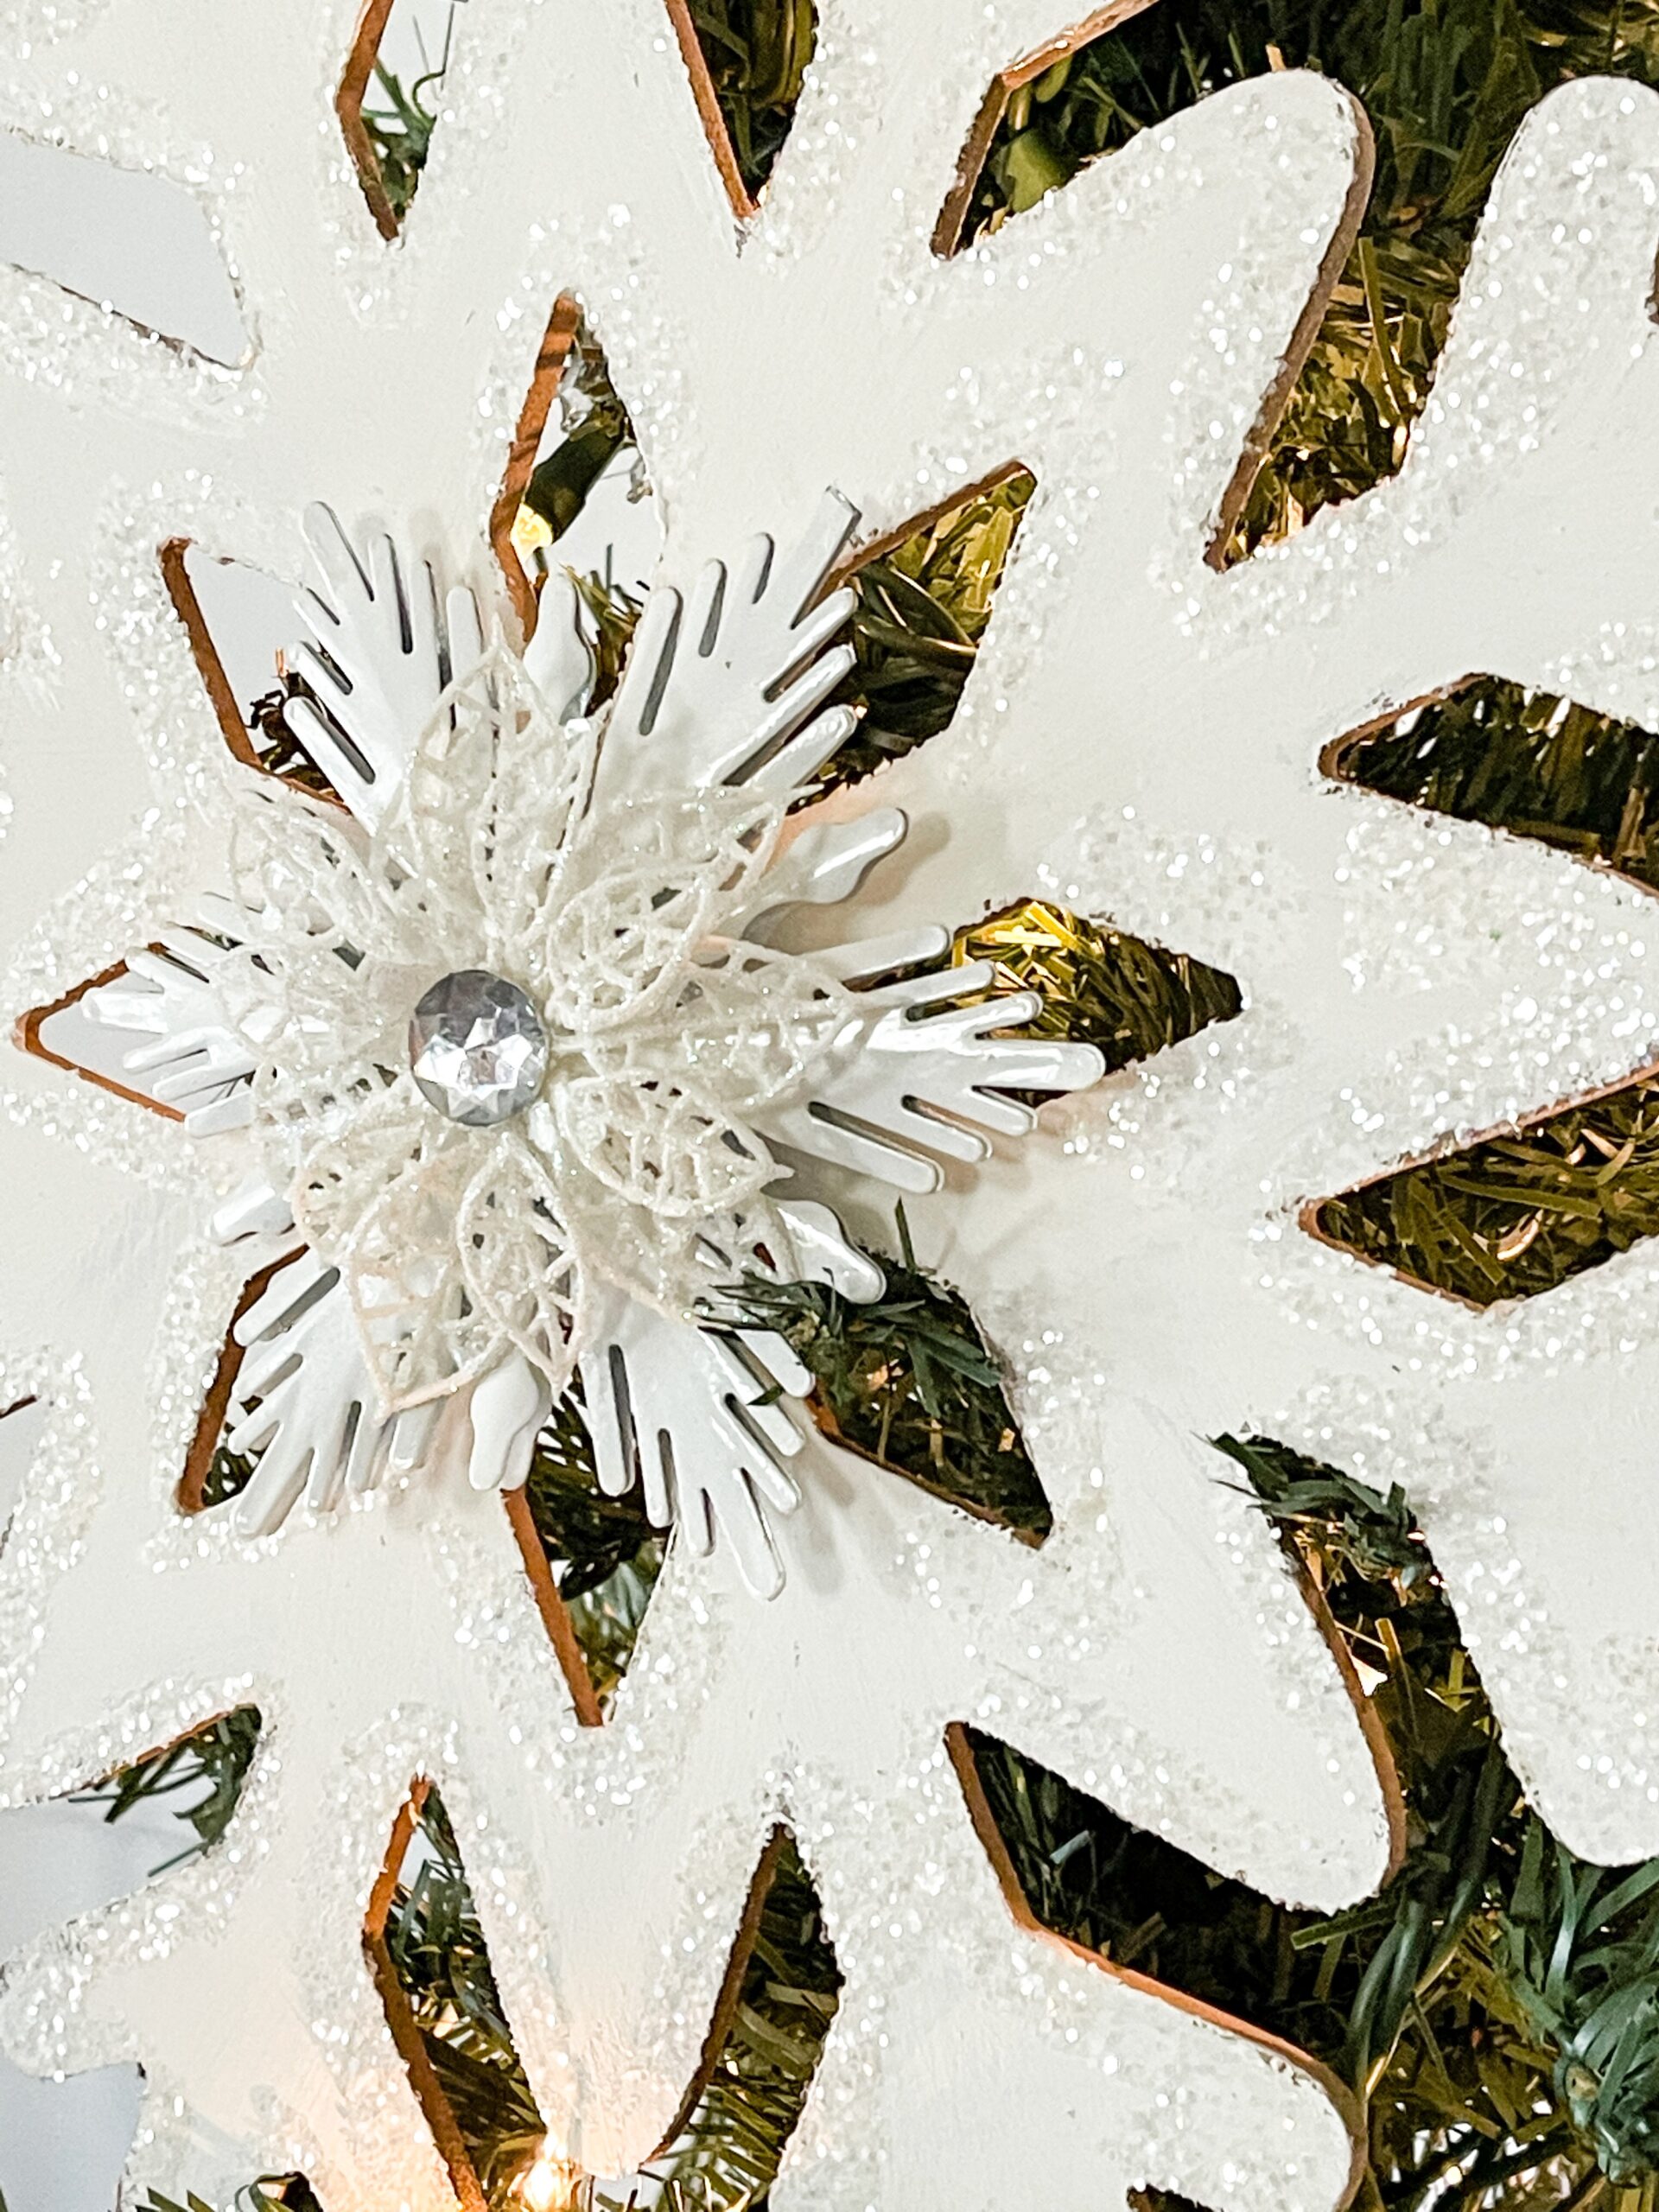 Dollar Tree Snowflake Ornaments - Create Make Decorate with Nikki